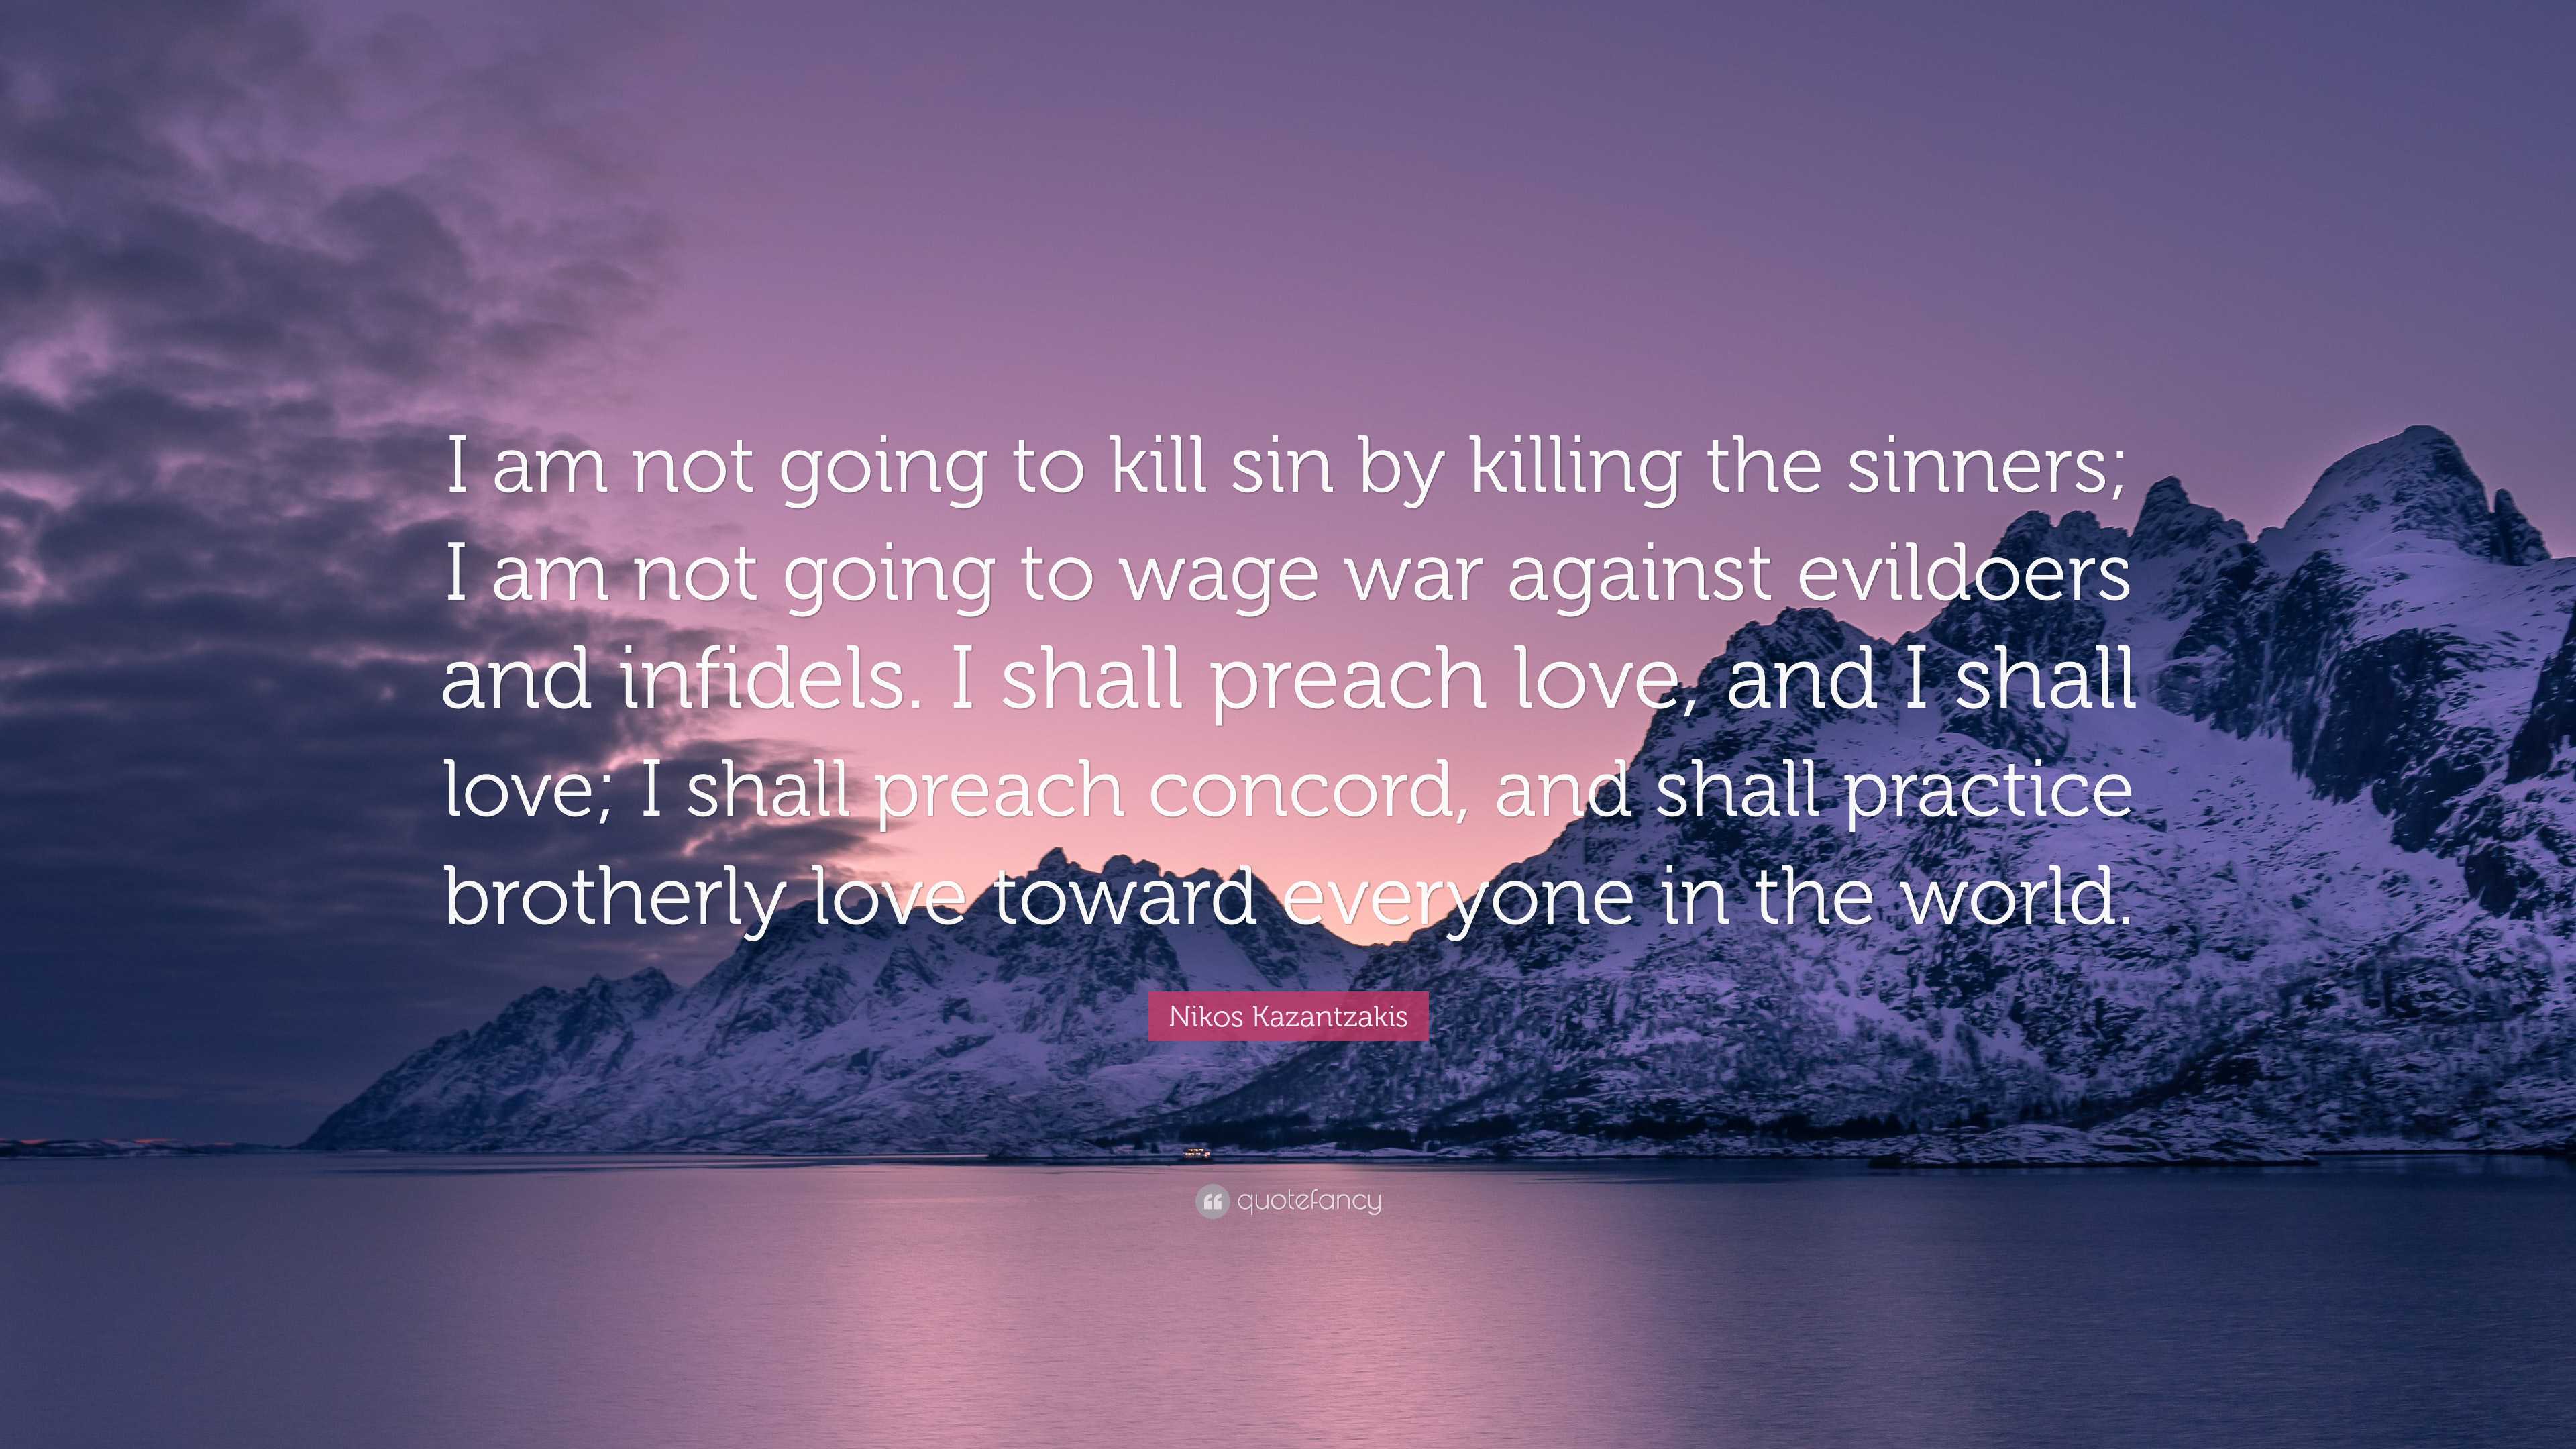 Nikos Kazantzakis Quote: “I am not going to kill sin by killing the  sinners; I am not going to wage war against evildoers and infidels. I shall  pr...”